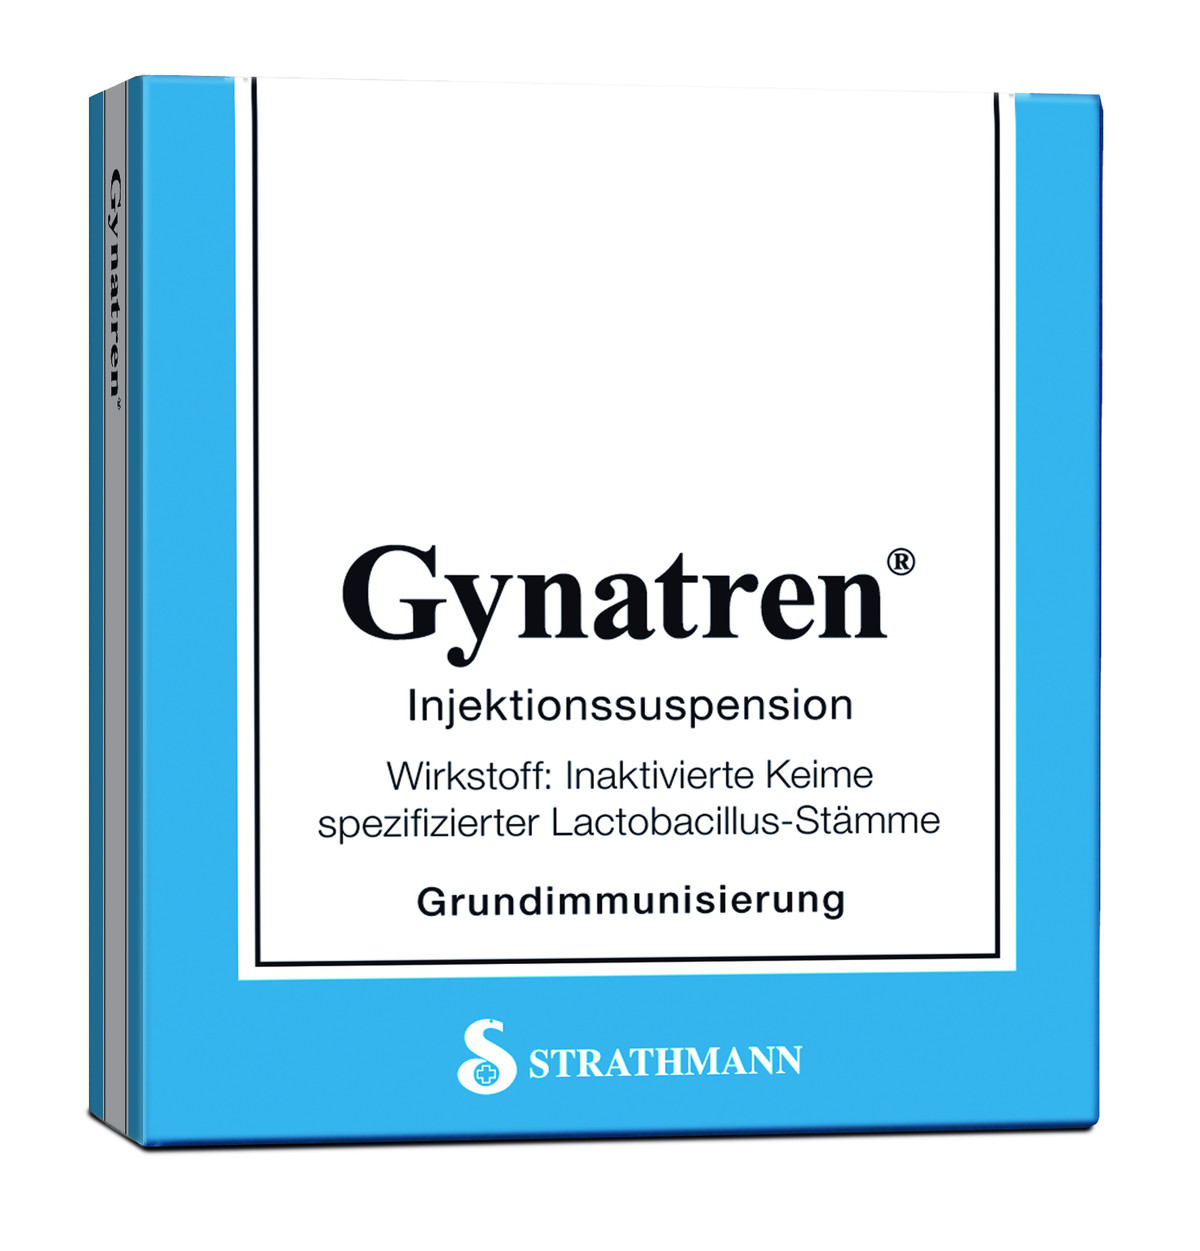 Gynatren booster